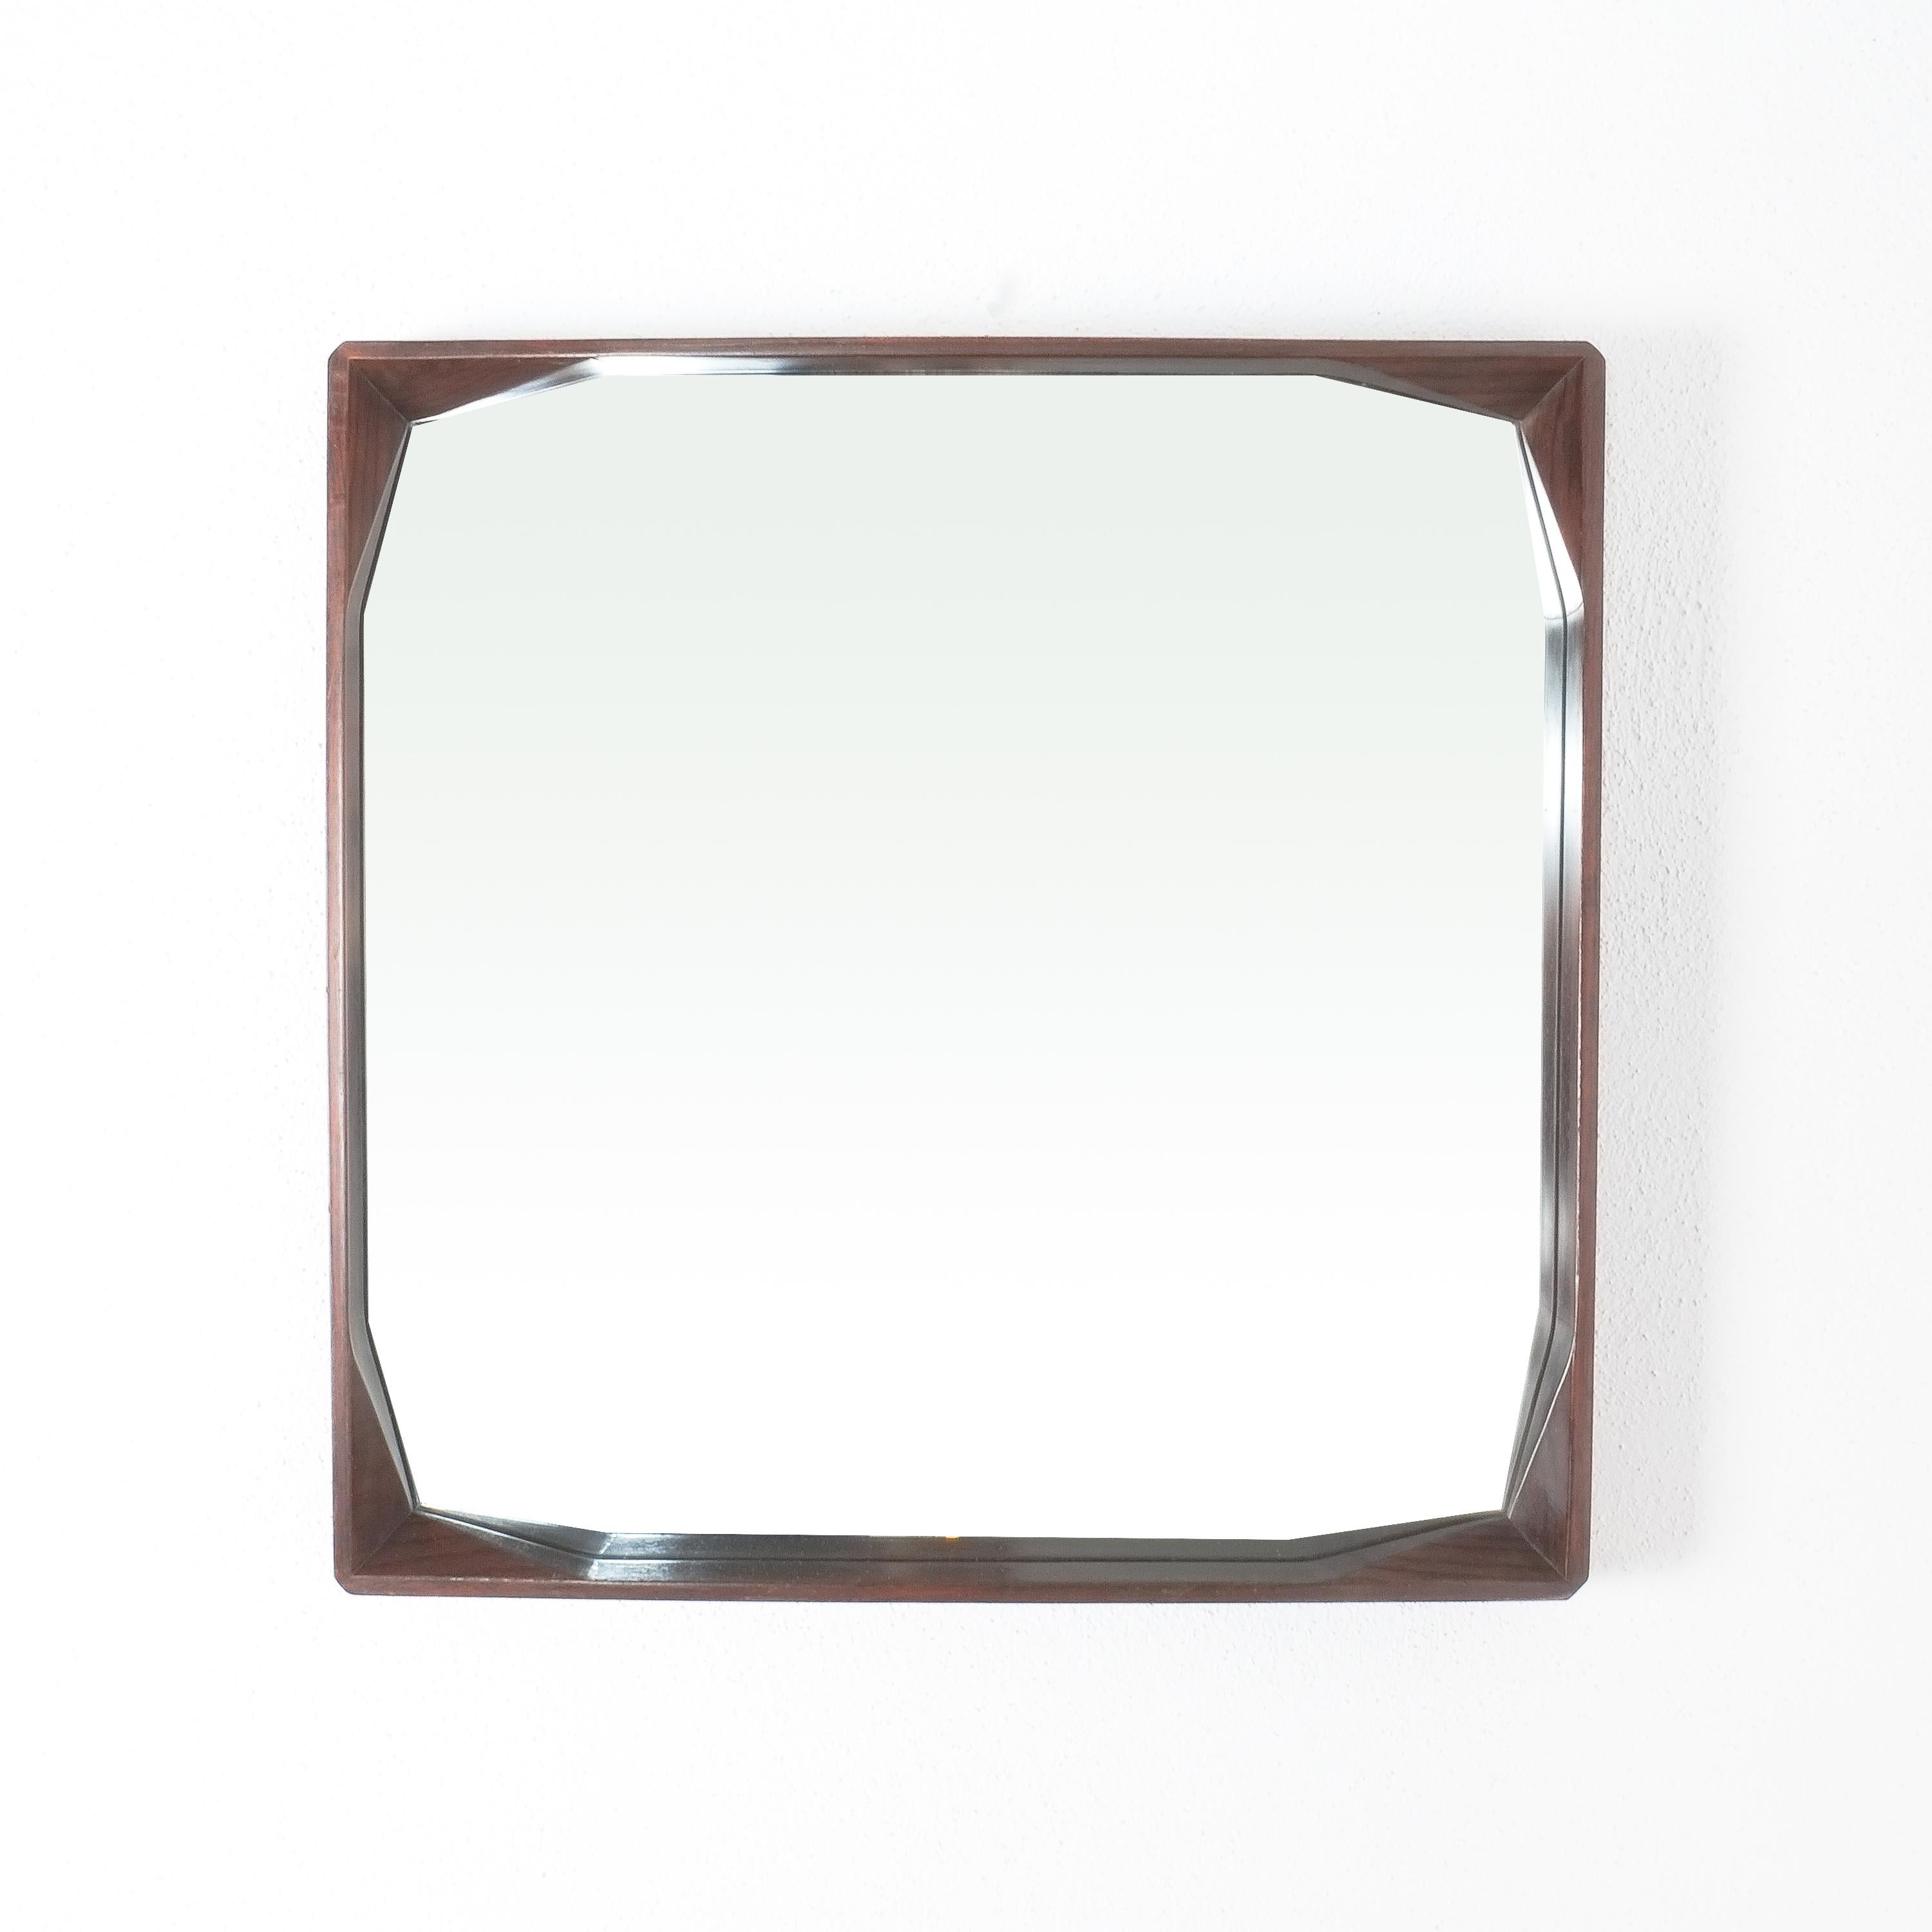 Dino Cavalli walnut mirror, midcentury, Italy

Dino Cavalli rectangular walnut mirror, midcentury, Italy. Measuring 24.4